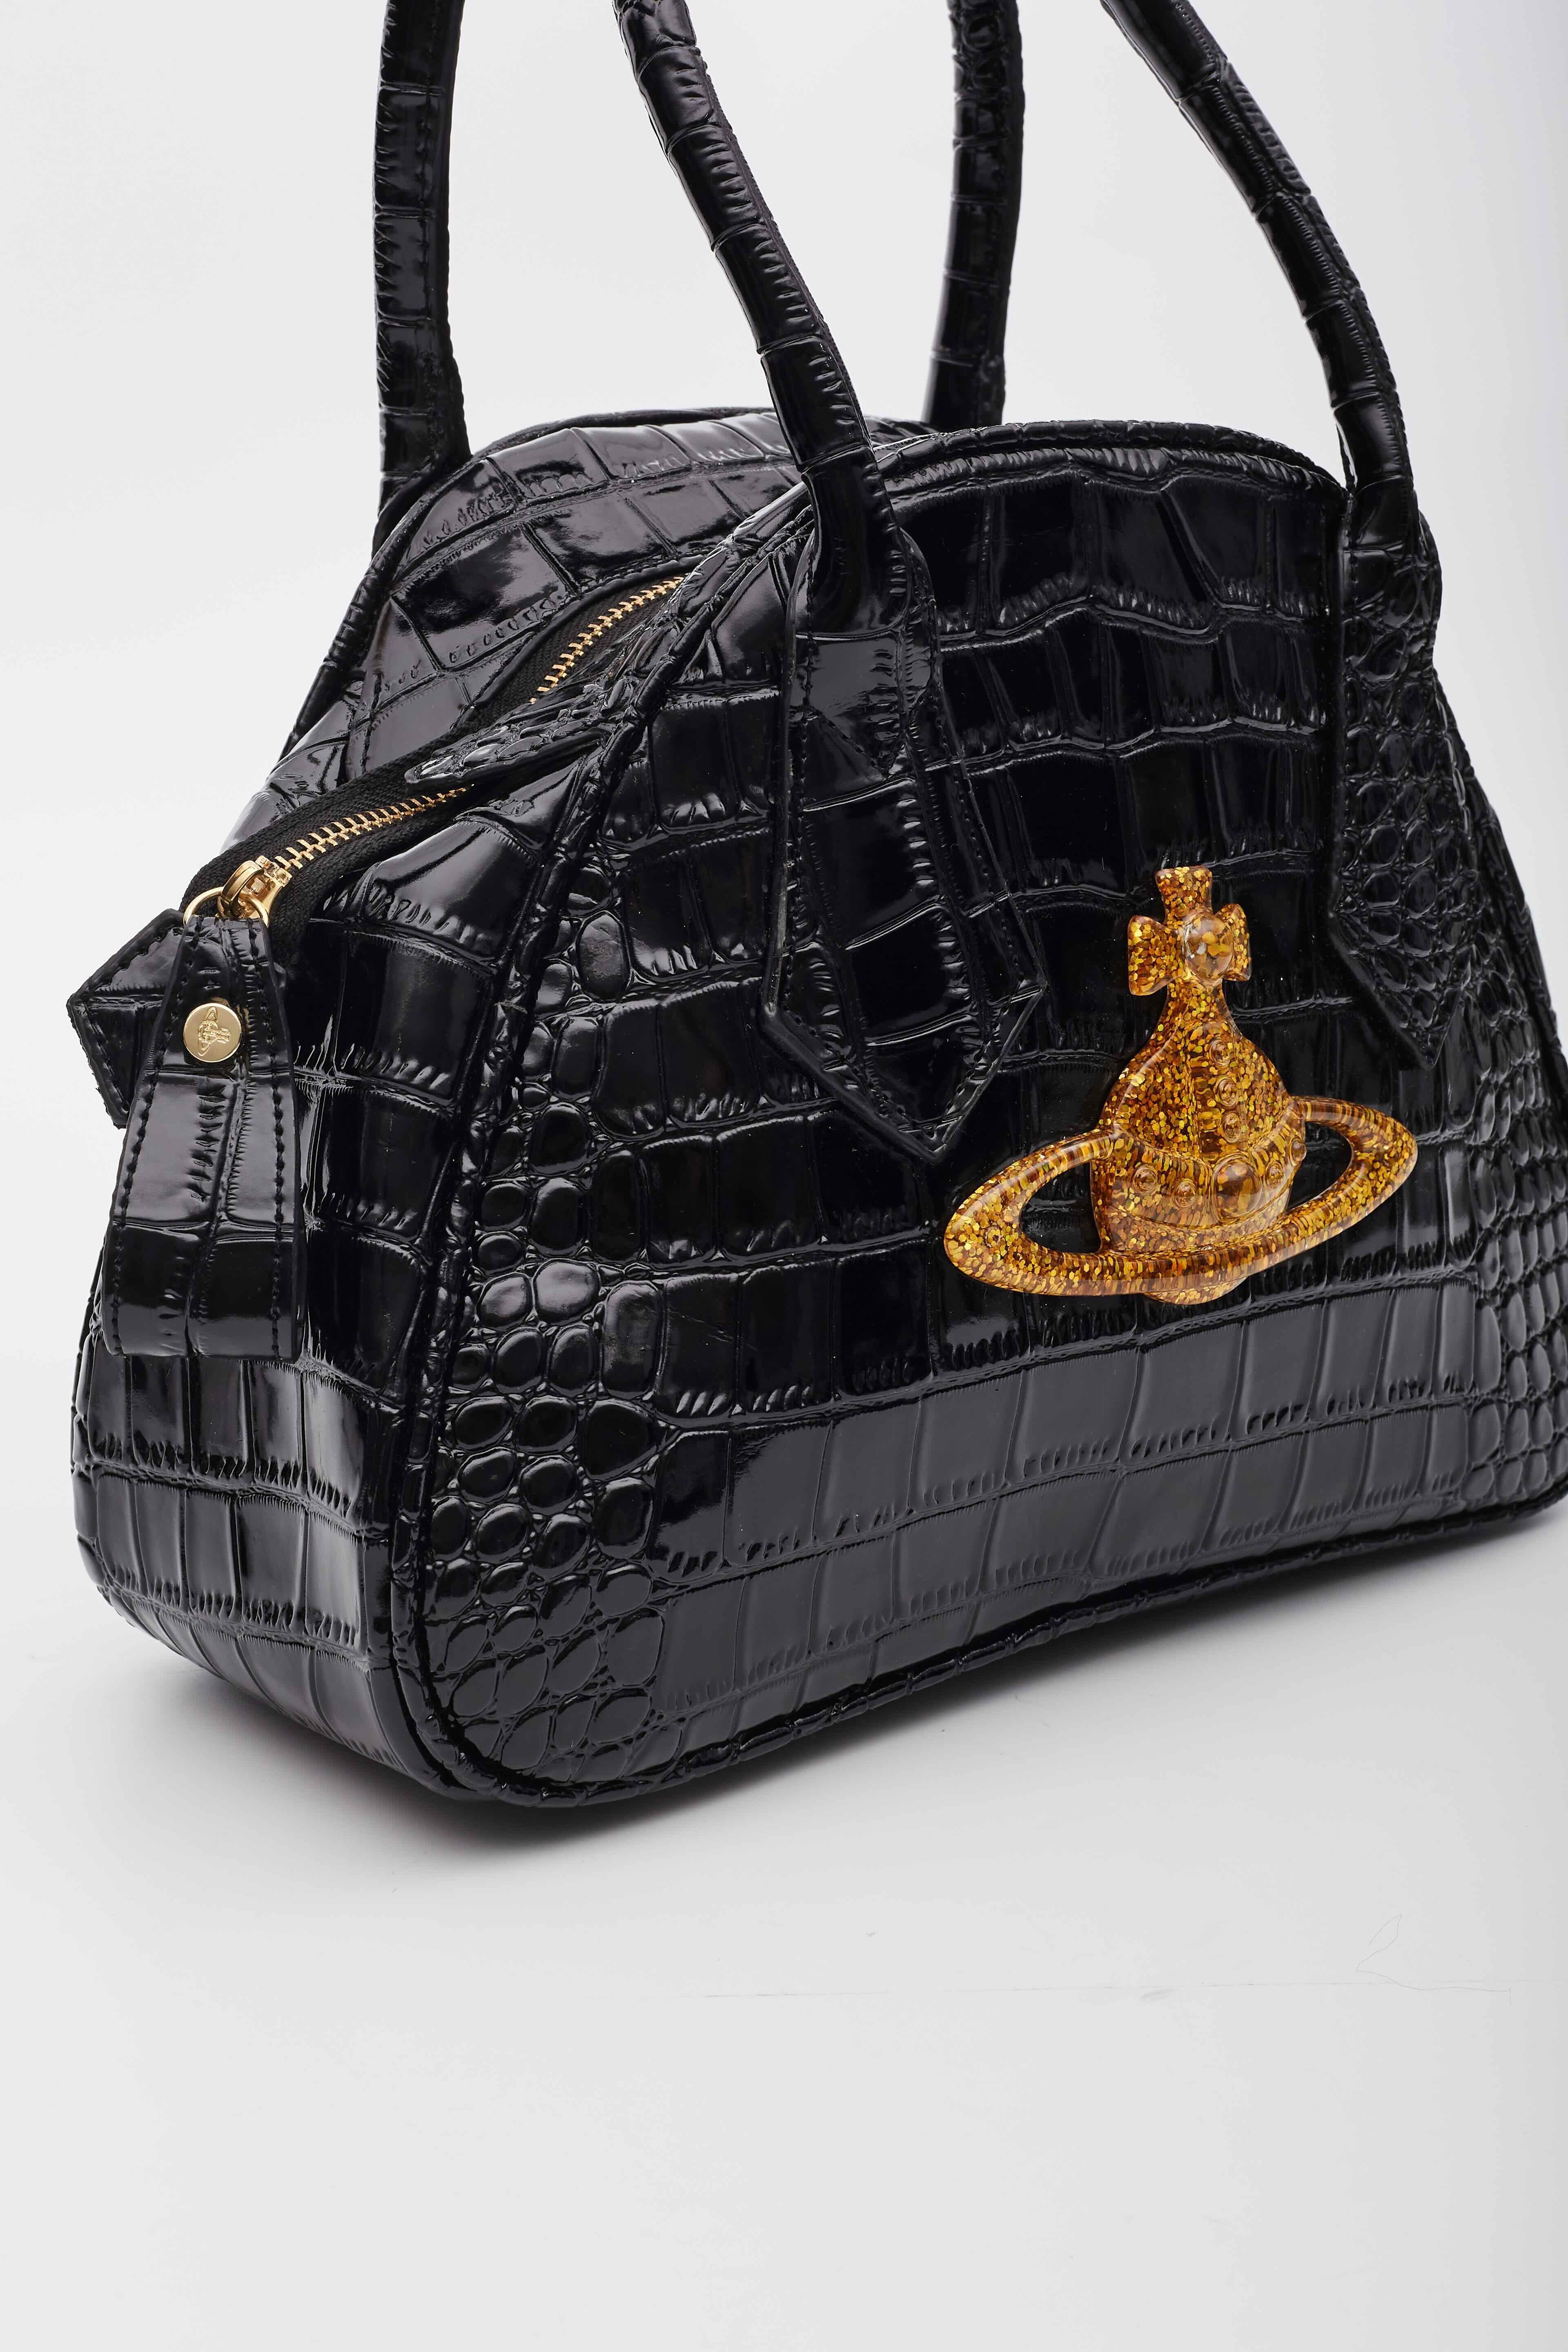 Vivienne Westwood Black Crocodile Chancery Handbag For Sale 2